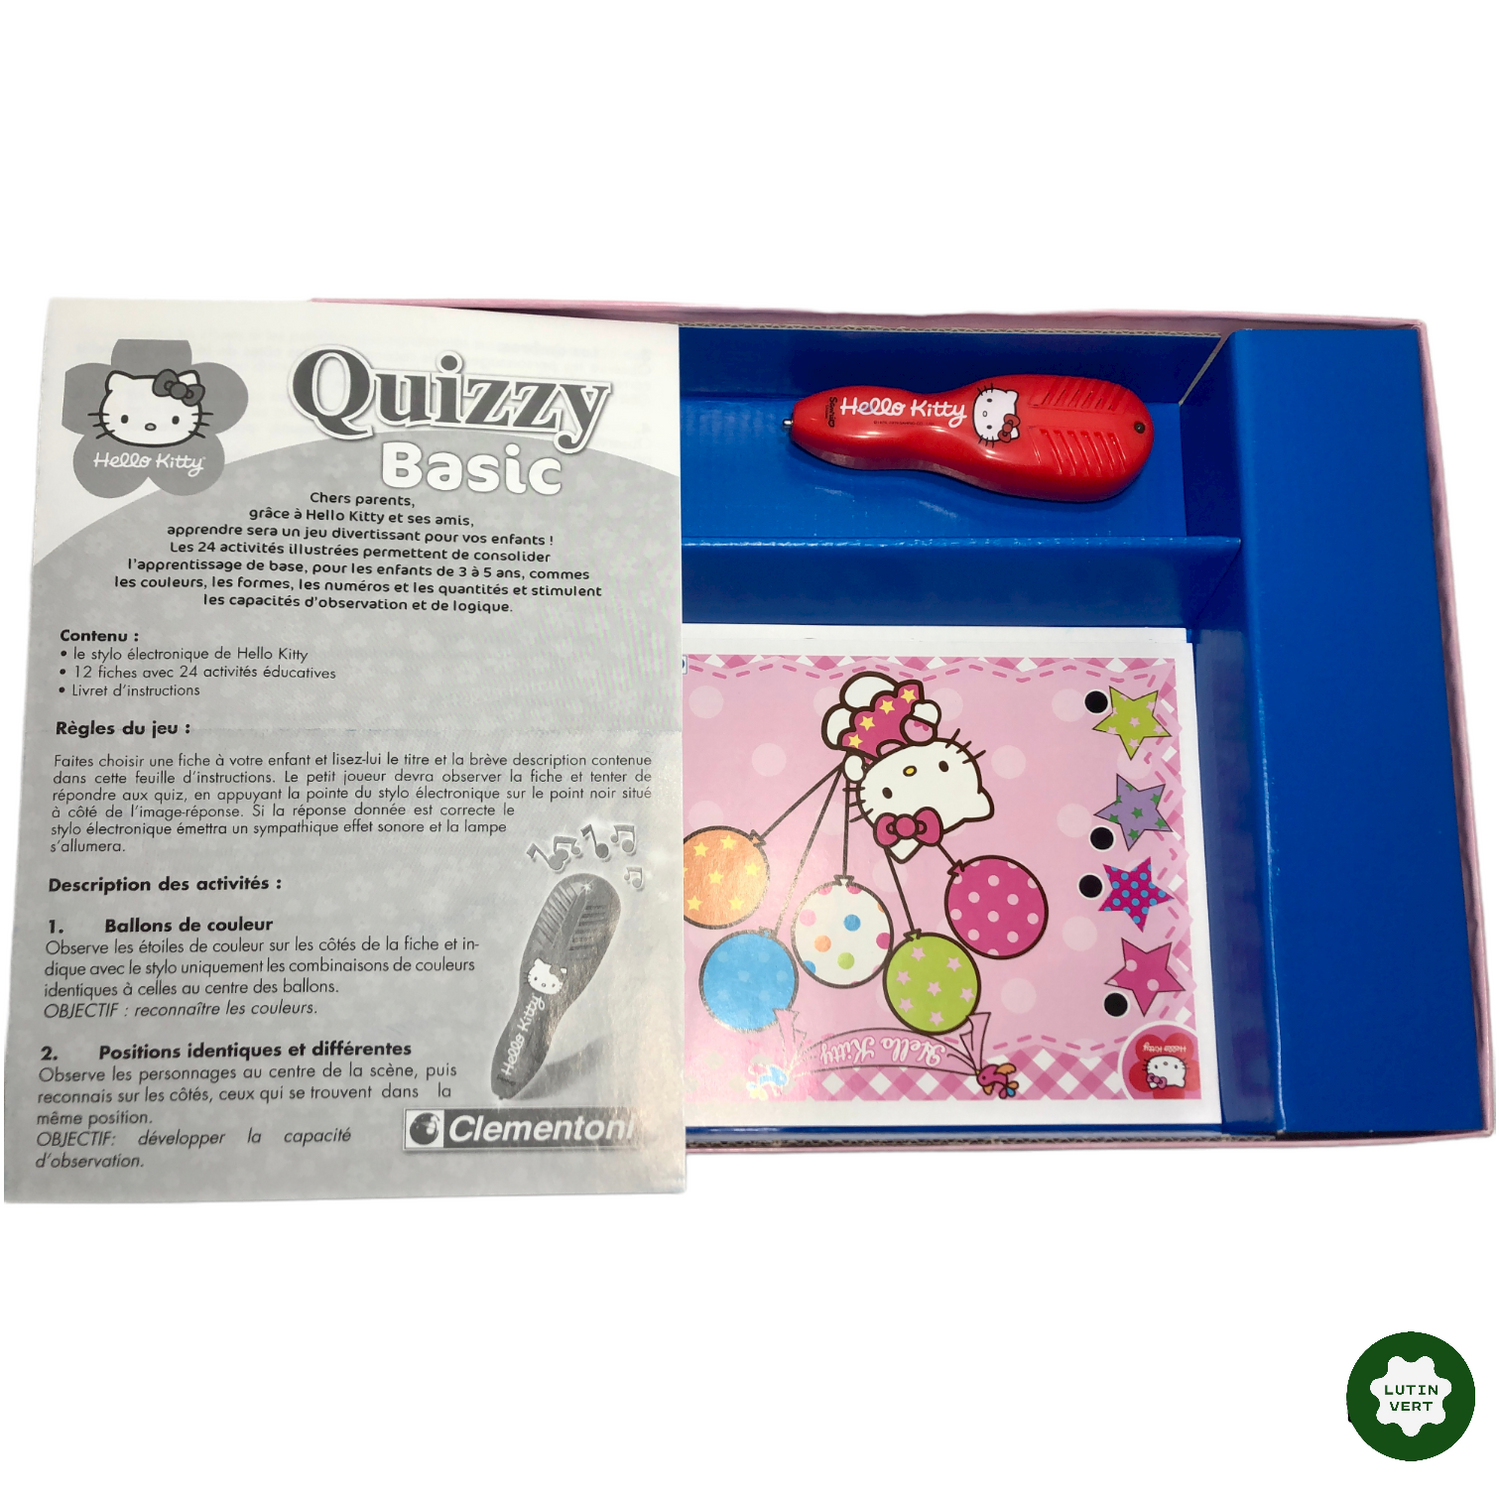 Quizzy Basic Hello Kitty occasion - Jeu éducatif interactif